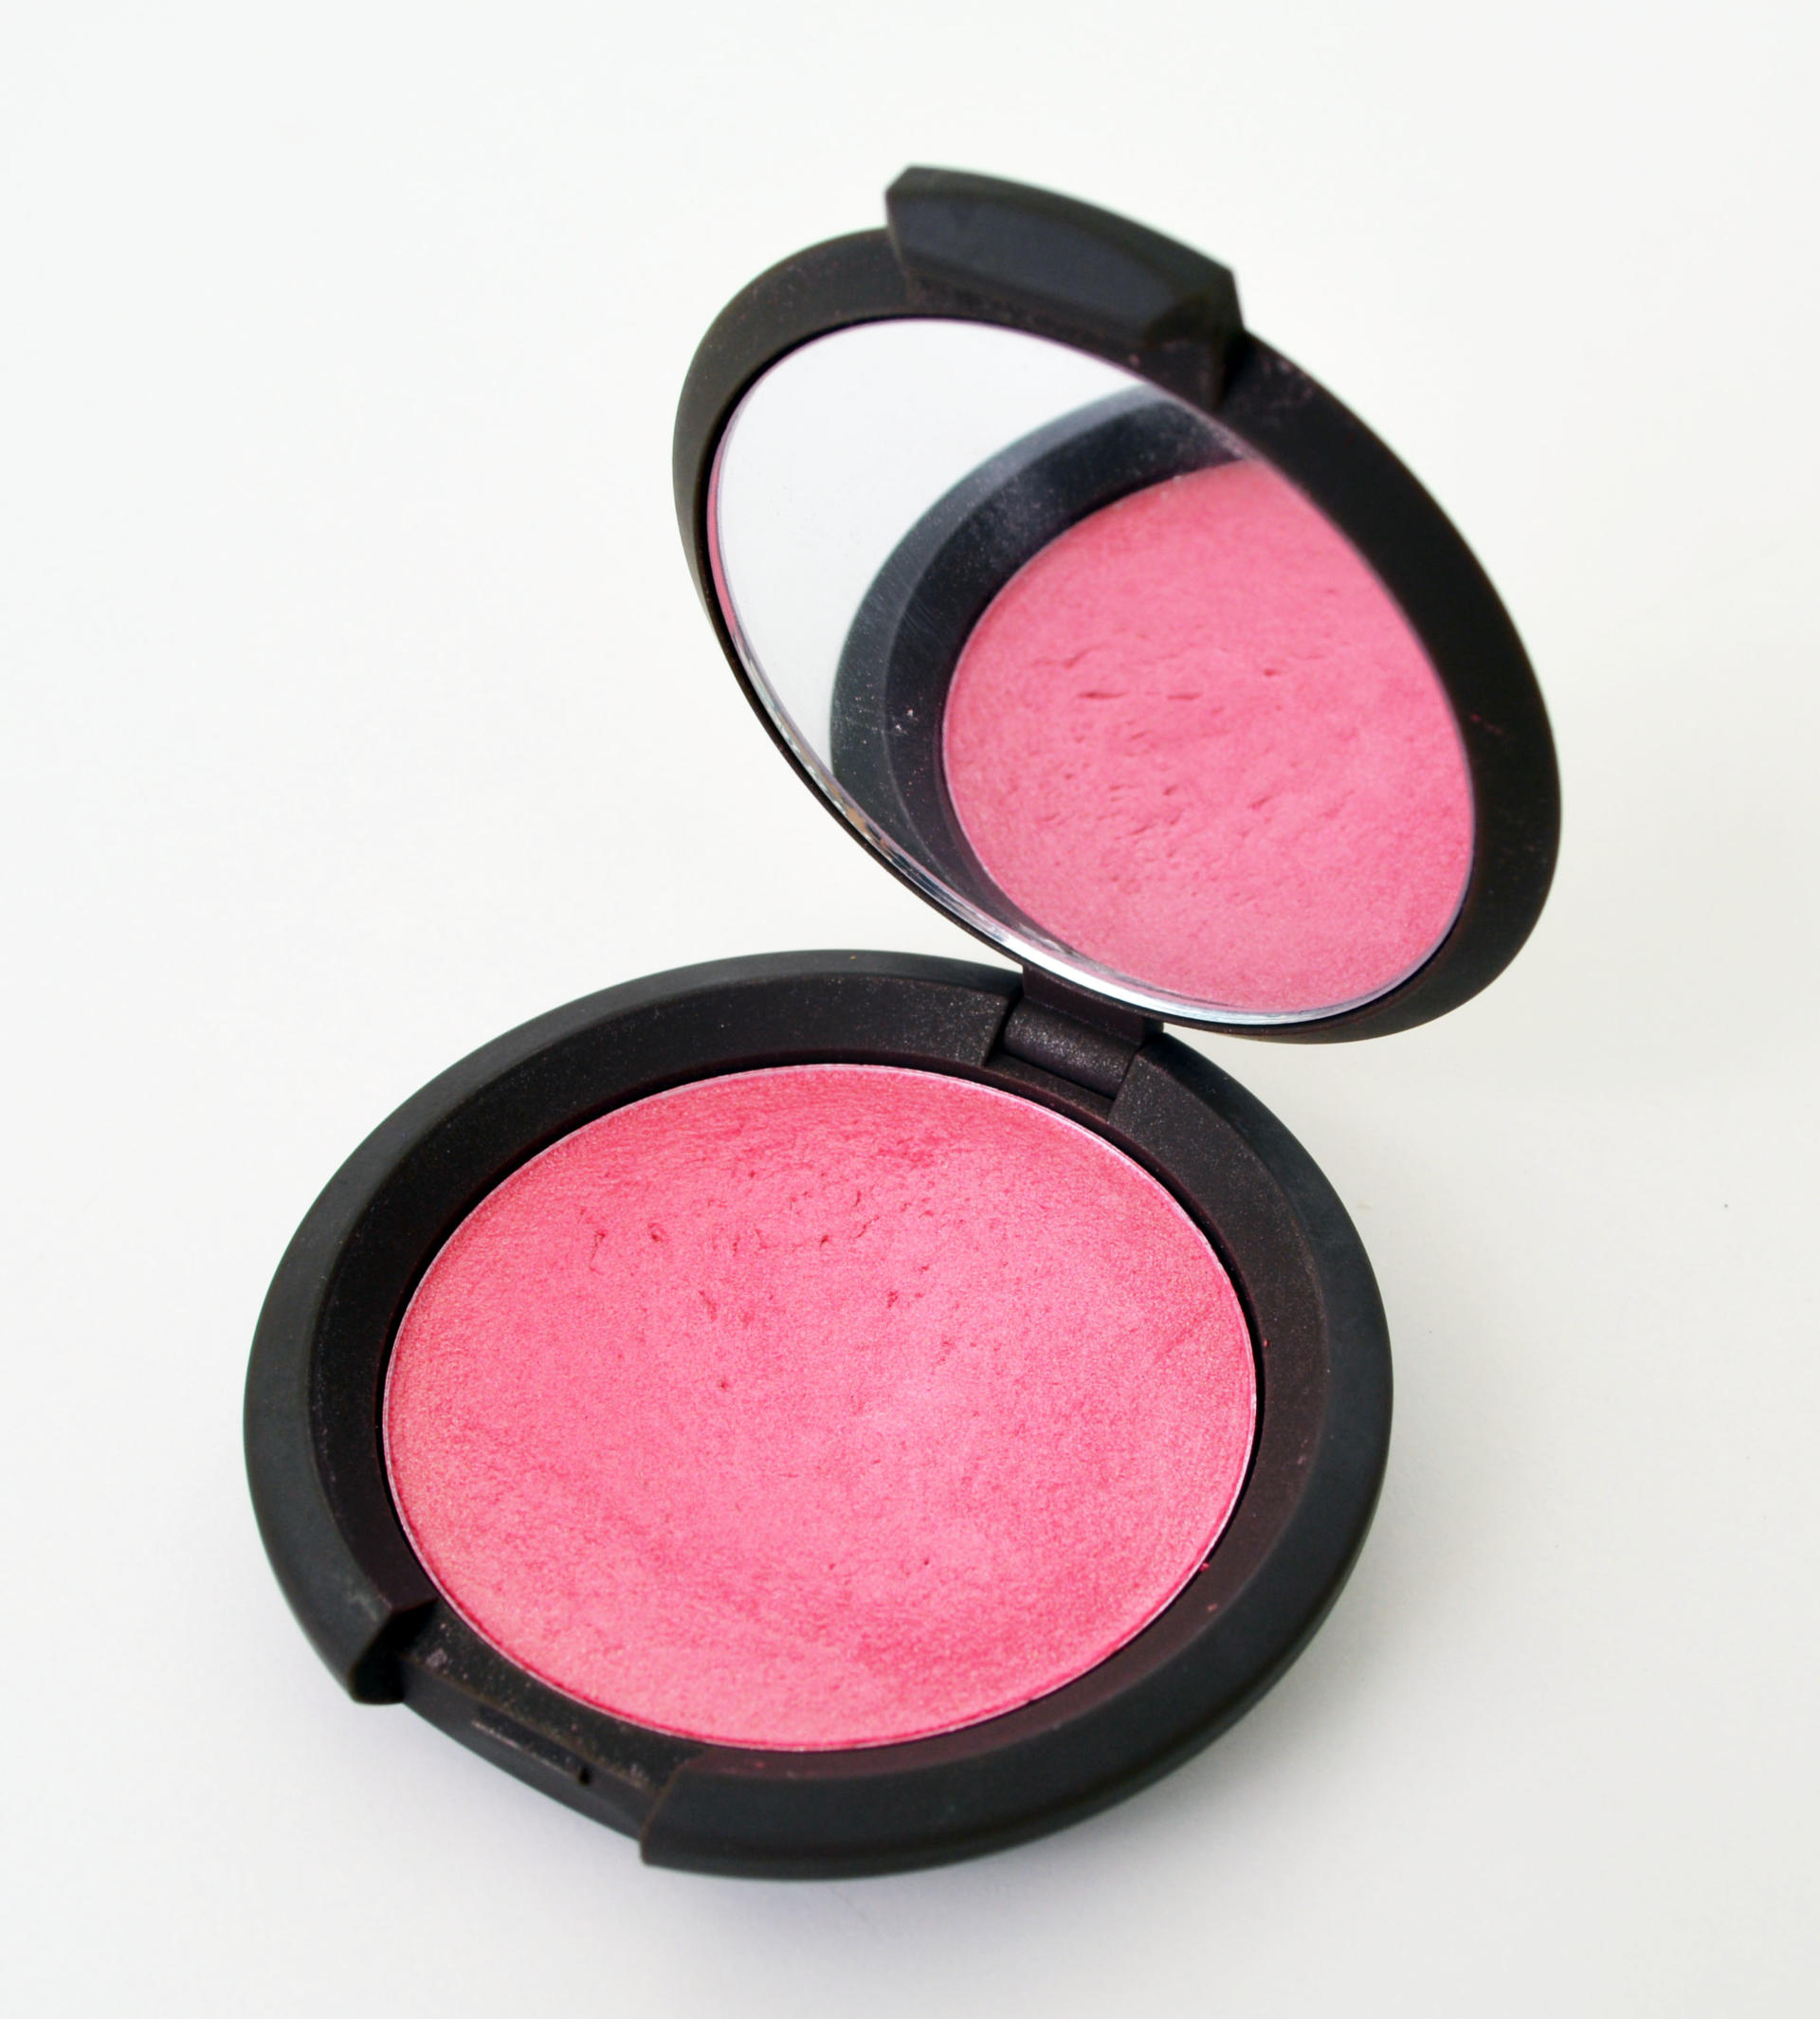 Becca Shimmering Skin Perfector Luminous Blush in Camellia